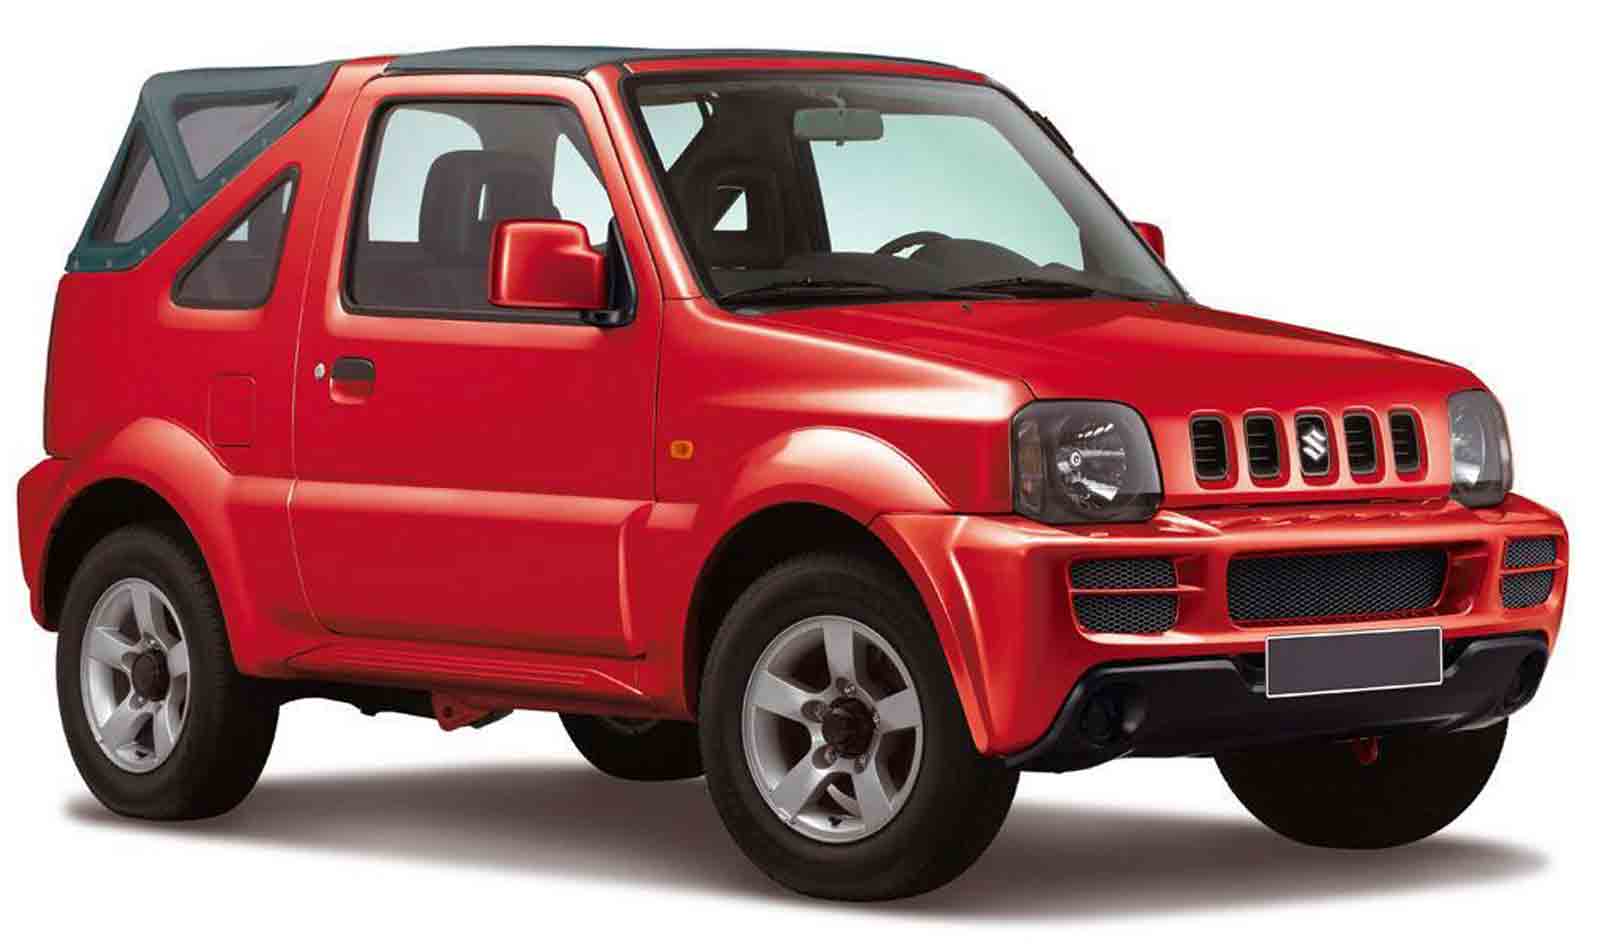 CATEGORY F: Suzuki Jimny